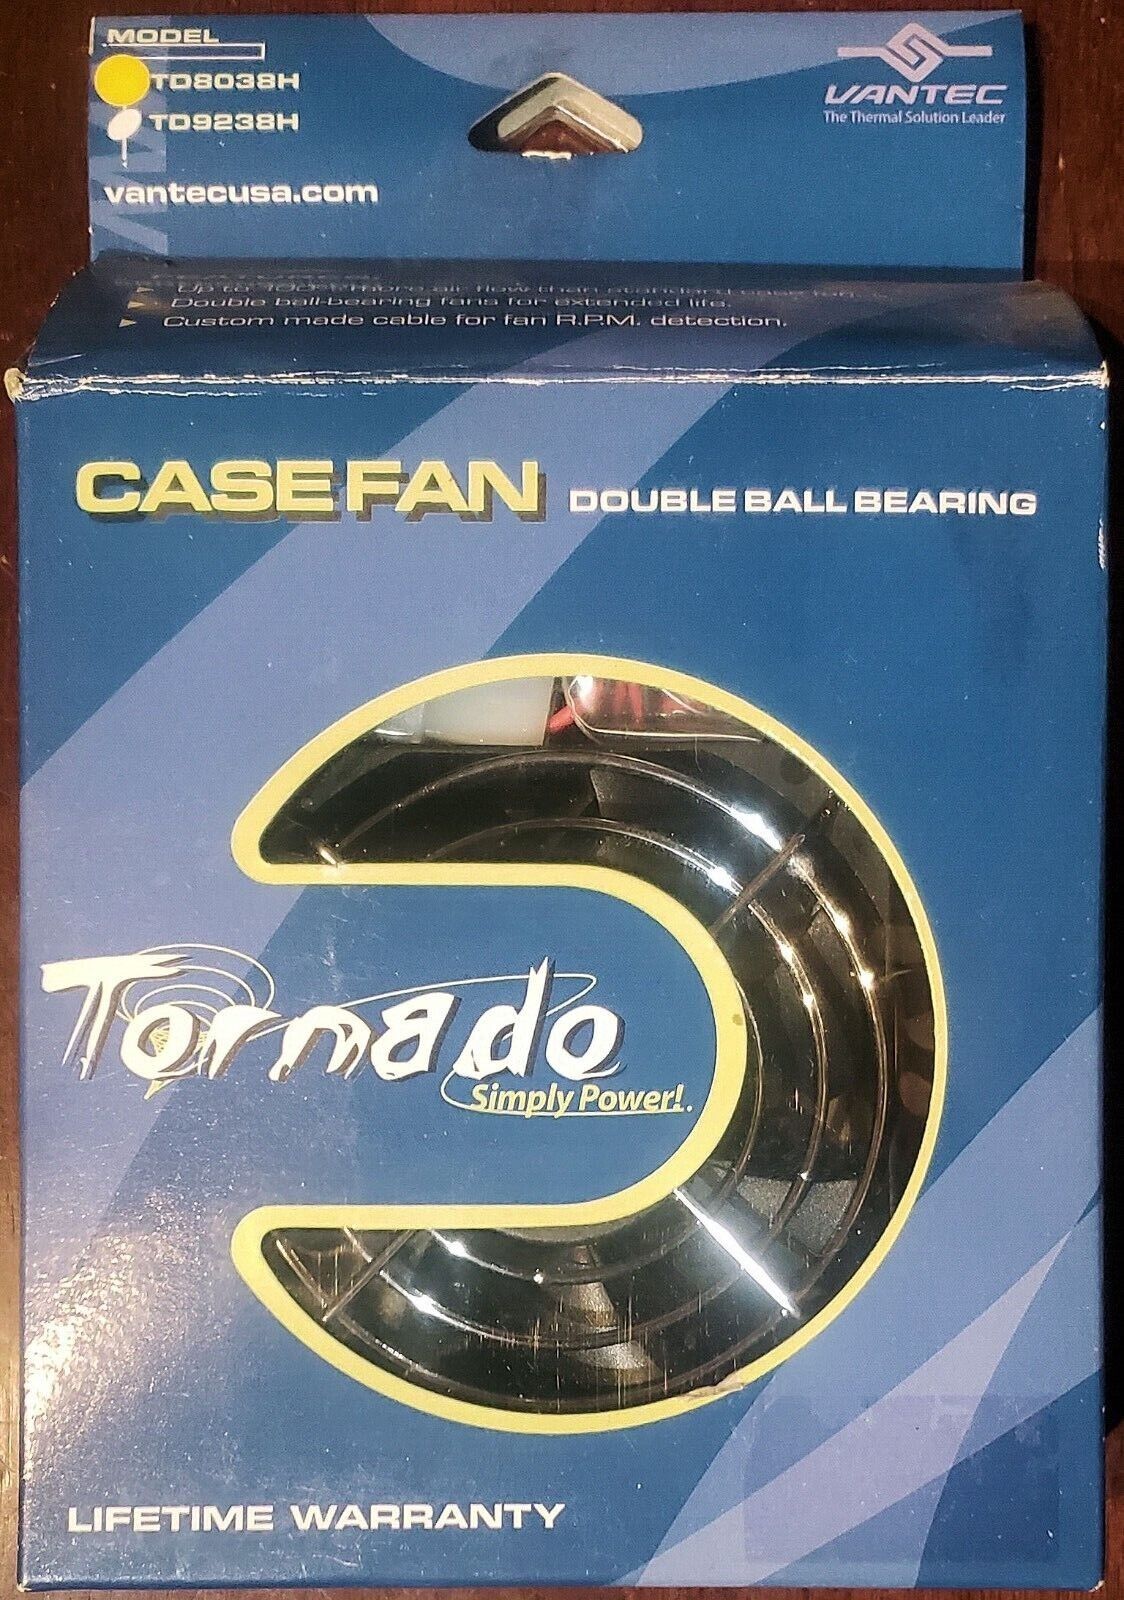 NEW Vantec Tornado 80mm High Performance Double Ball Bearing Case Fan, VERY RARE